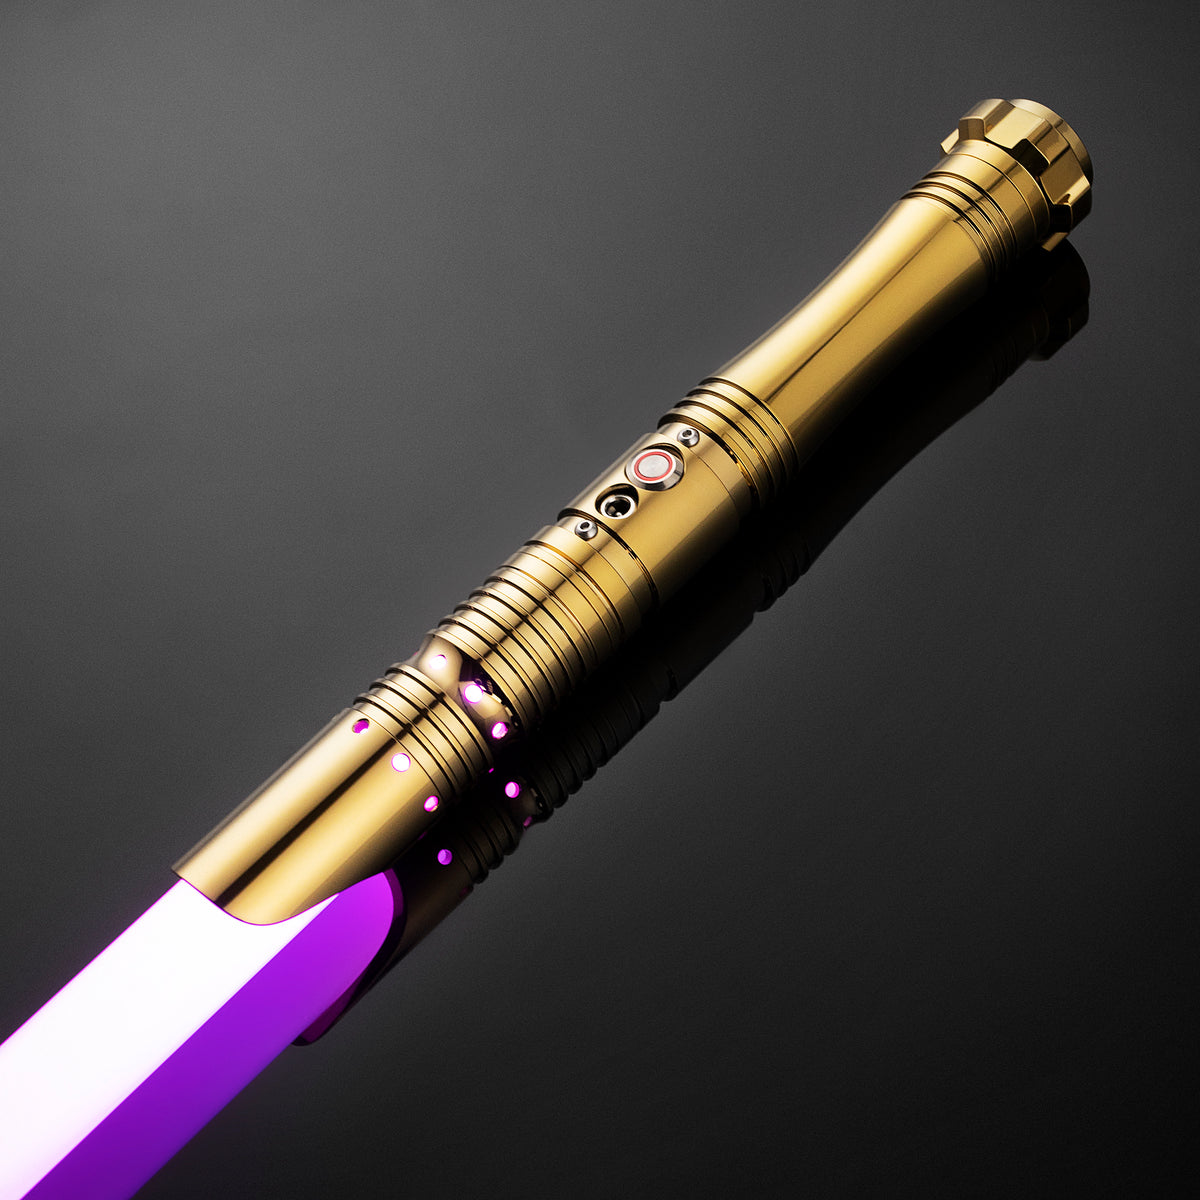 SaberCustom heavy dueling lightsaber fx smooth swing 9 sound fonts infinite color changing gold saber